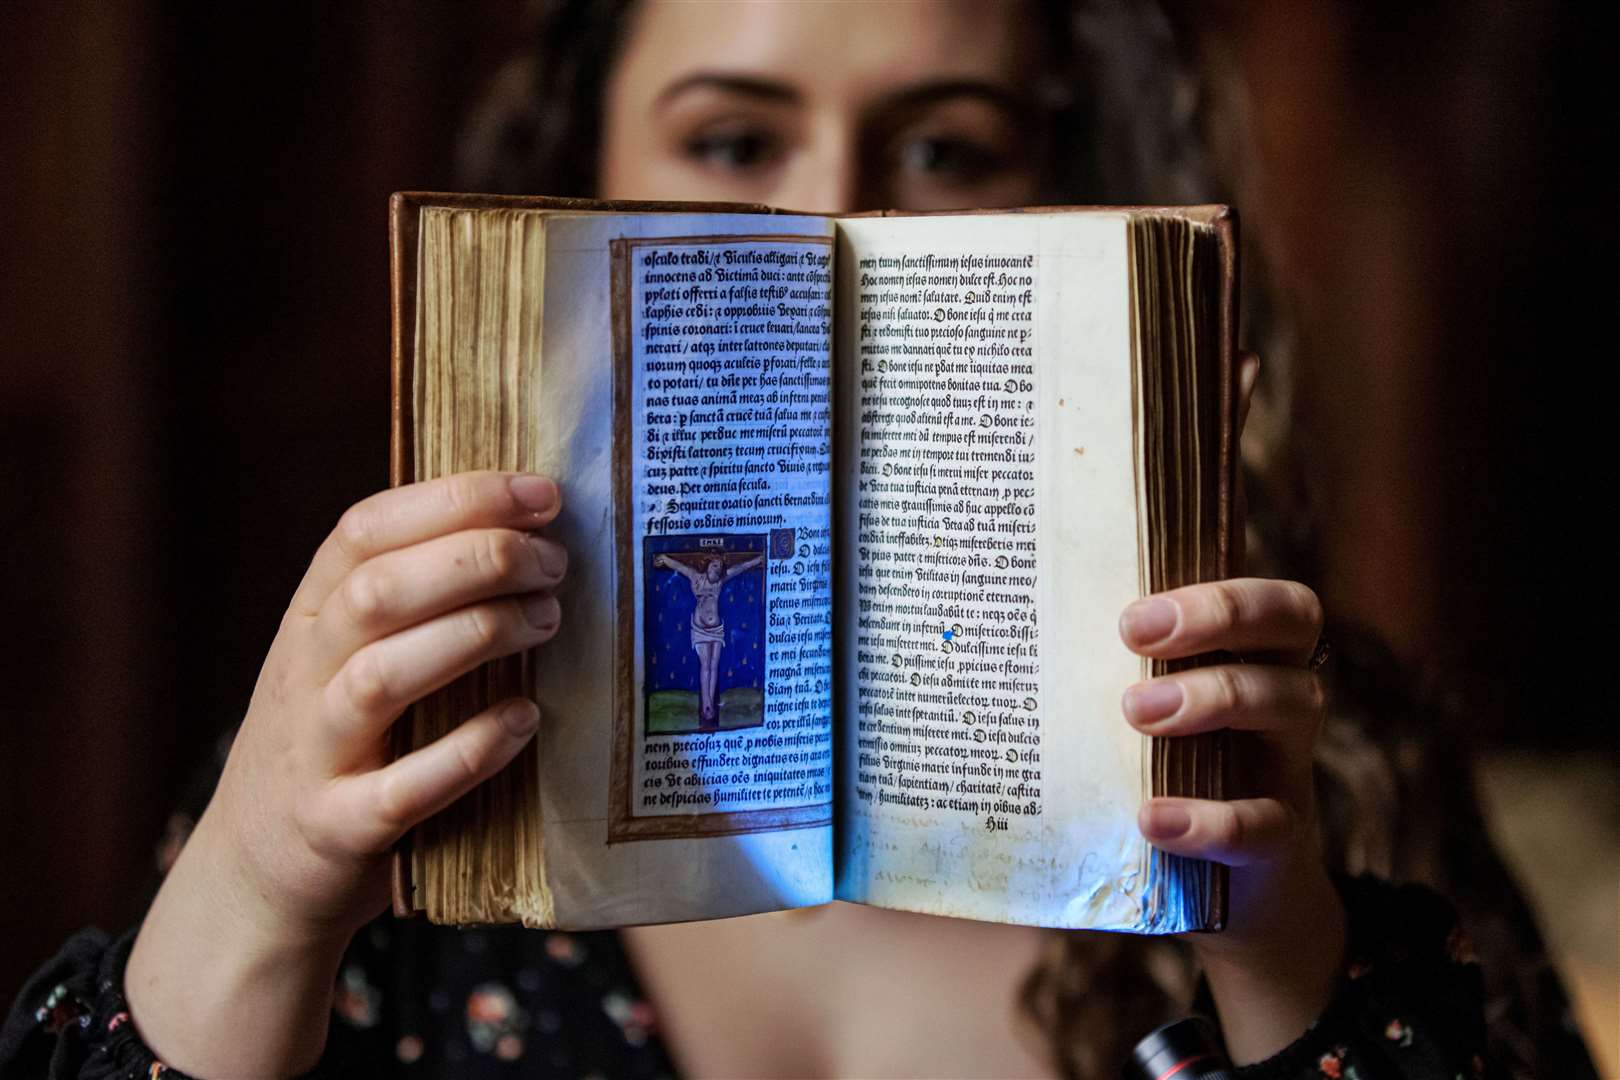 Ultraviolet light reveals not seen before names and words hidden in Anne Boleyn’s historic prayerbook Picture: Hever Castle & Gardens